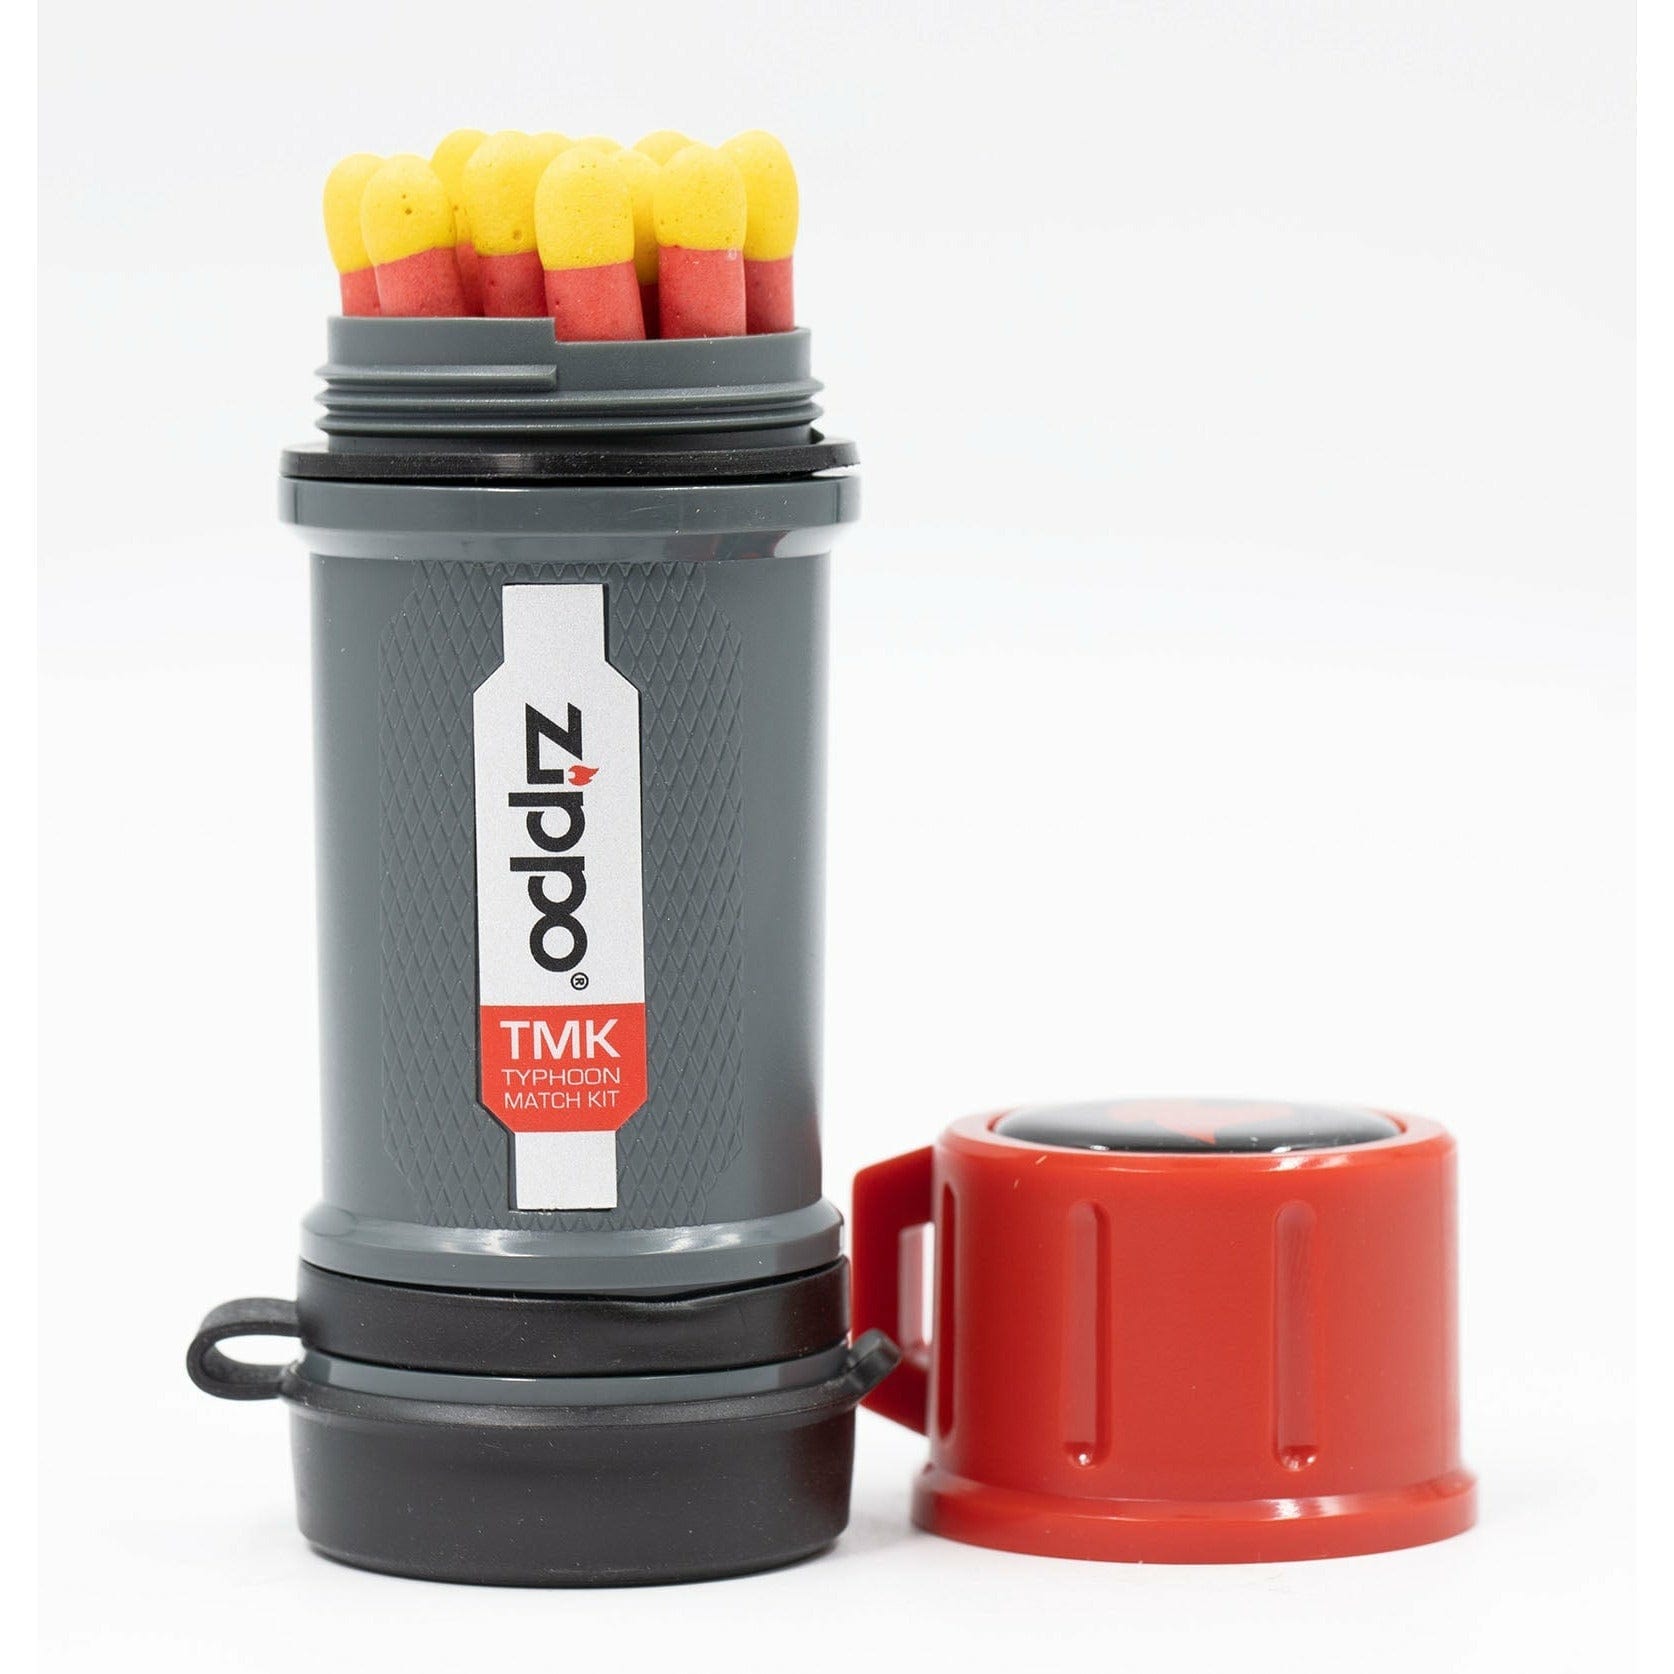 NOVA Zippo**ULTRA CRATE** NOVA, Zippo Typhoon Match Kit, Fire Fast Torch, Emergency Fire Kit